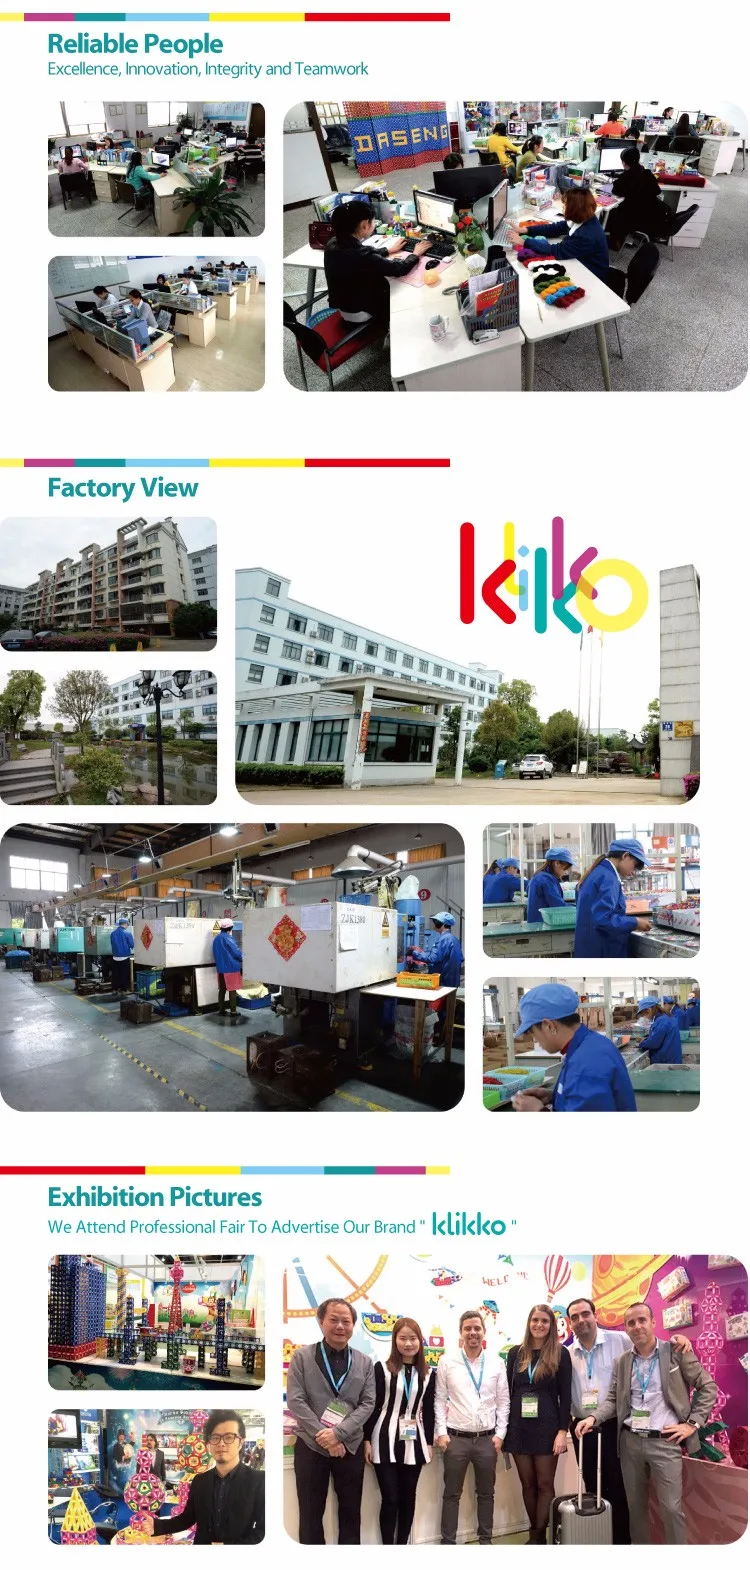 klikko experience construction engineering plastic building blocks toys for kids